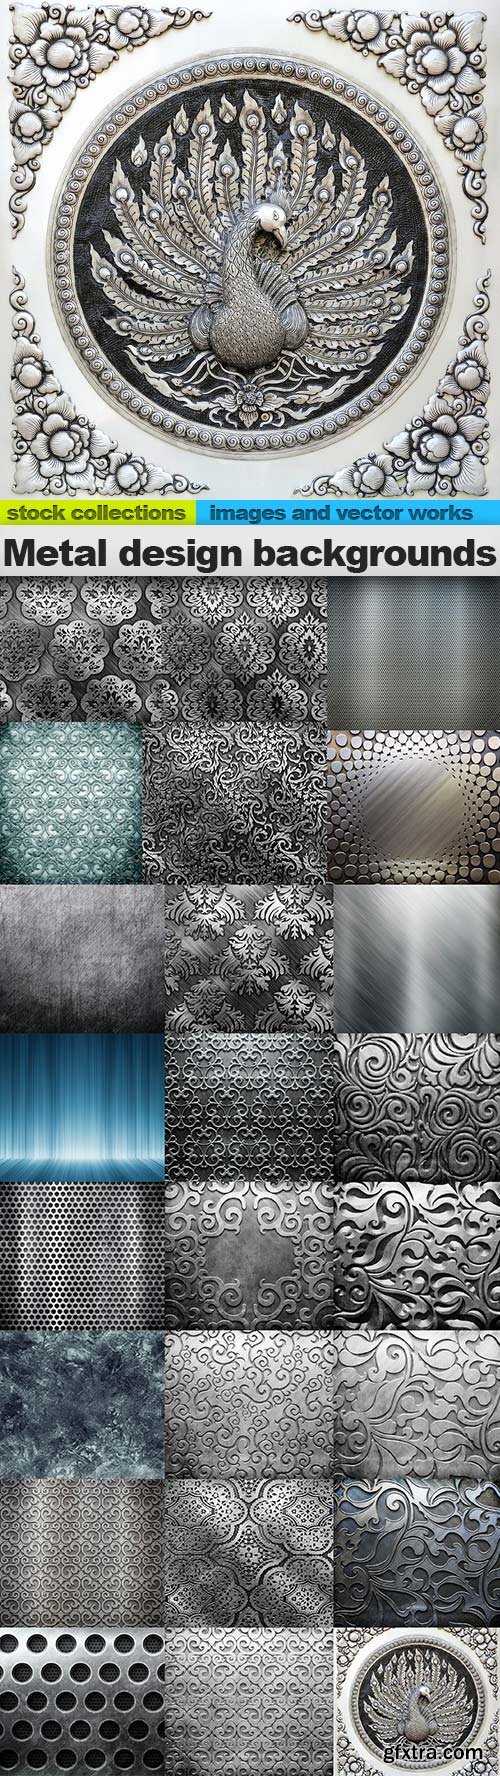 Metal design backgrounds, 24 x UHQ JPEG